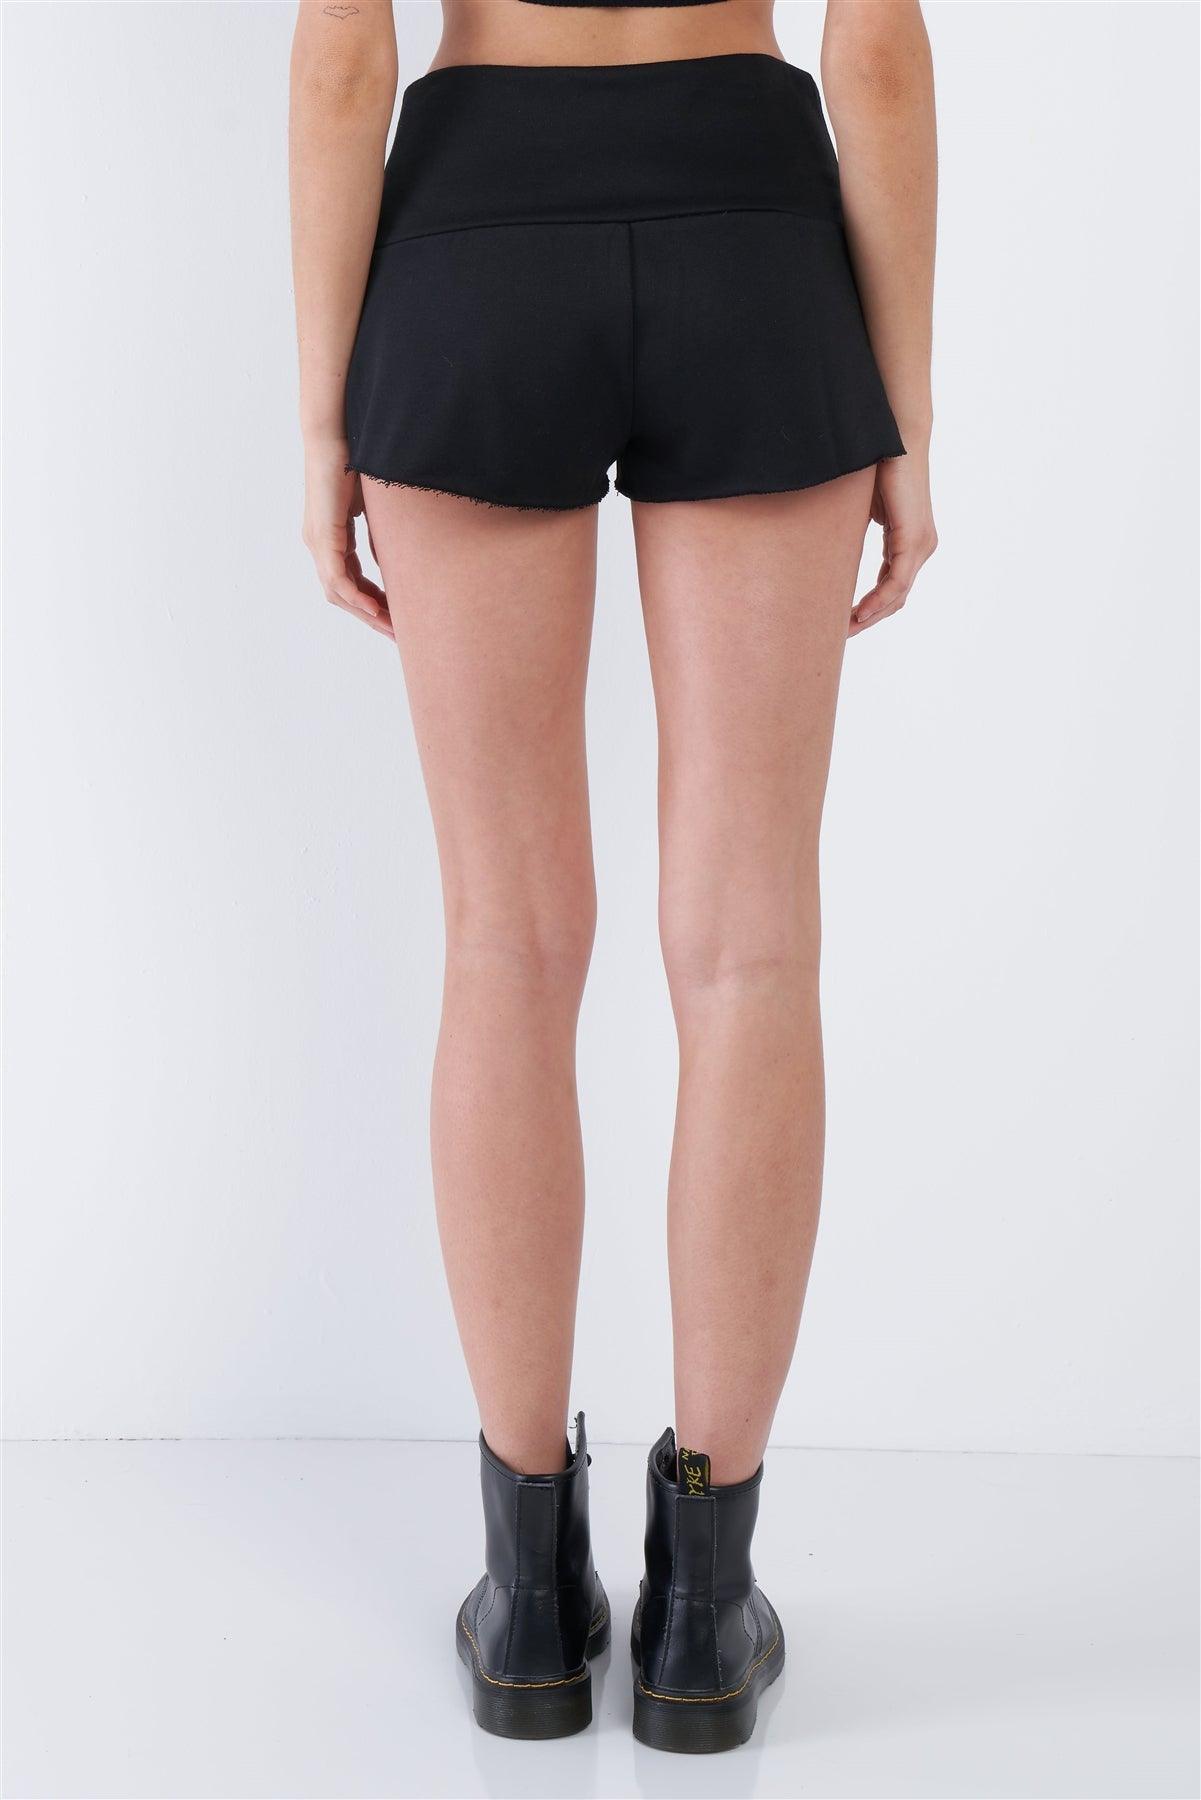 Black Lace Up Casual Raw Hem Short Shorts /2-1-1